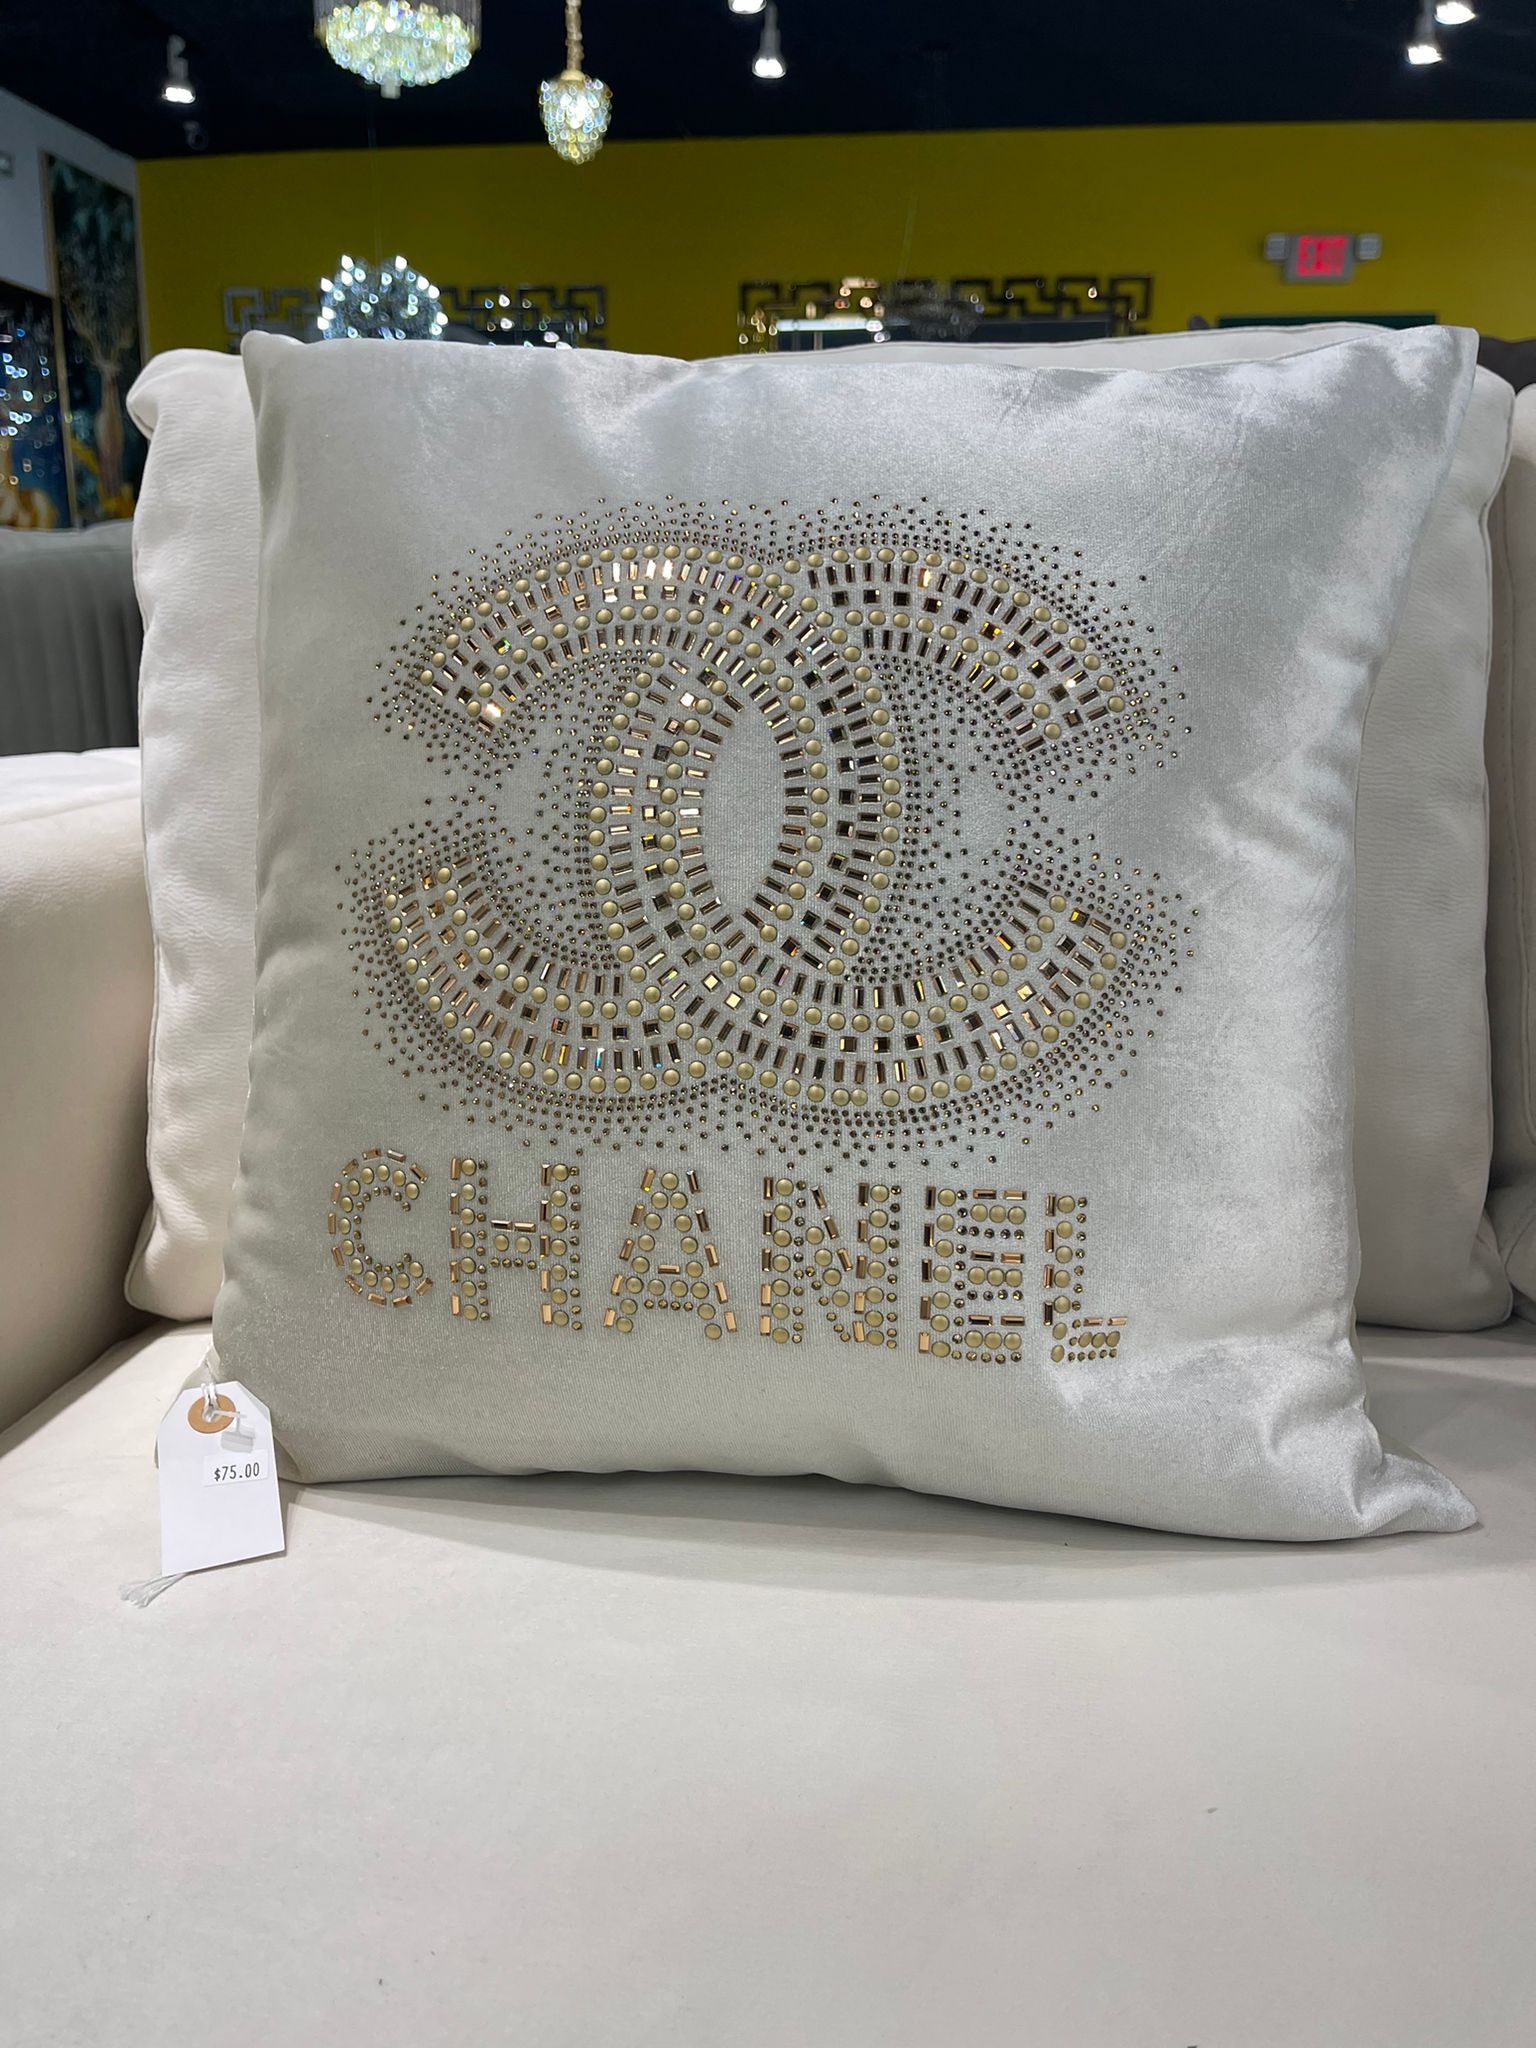 Chanel Bling Pillow 